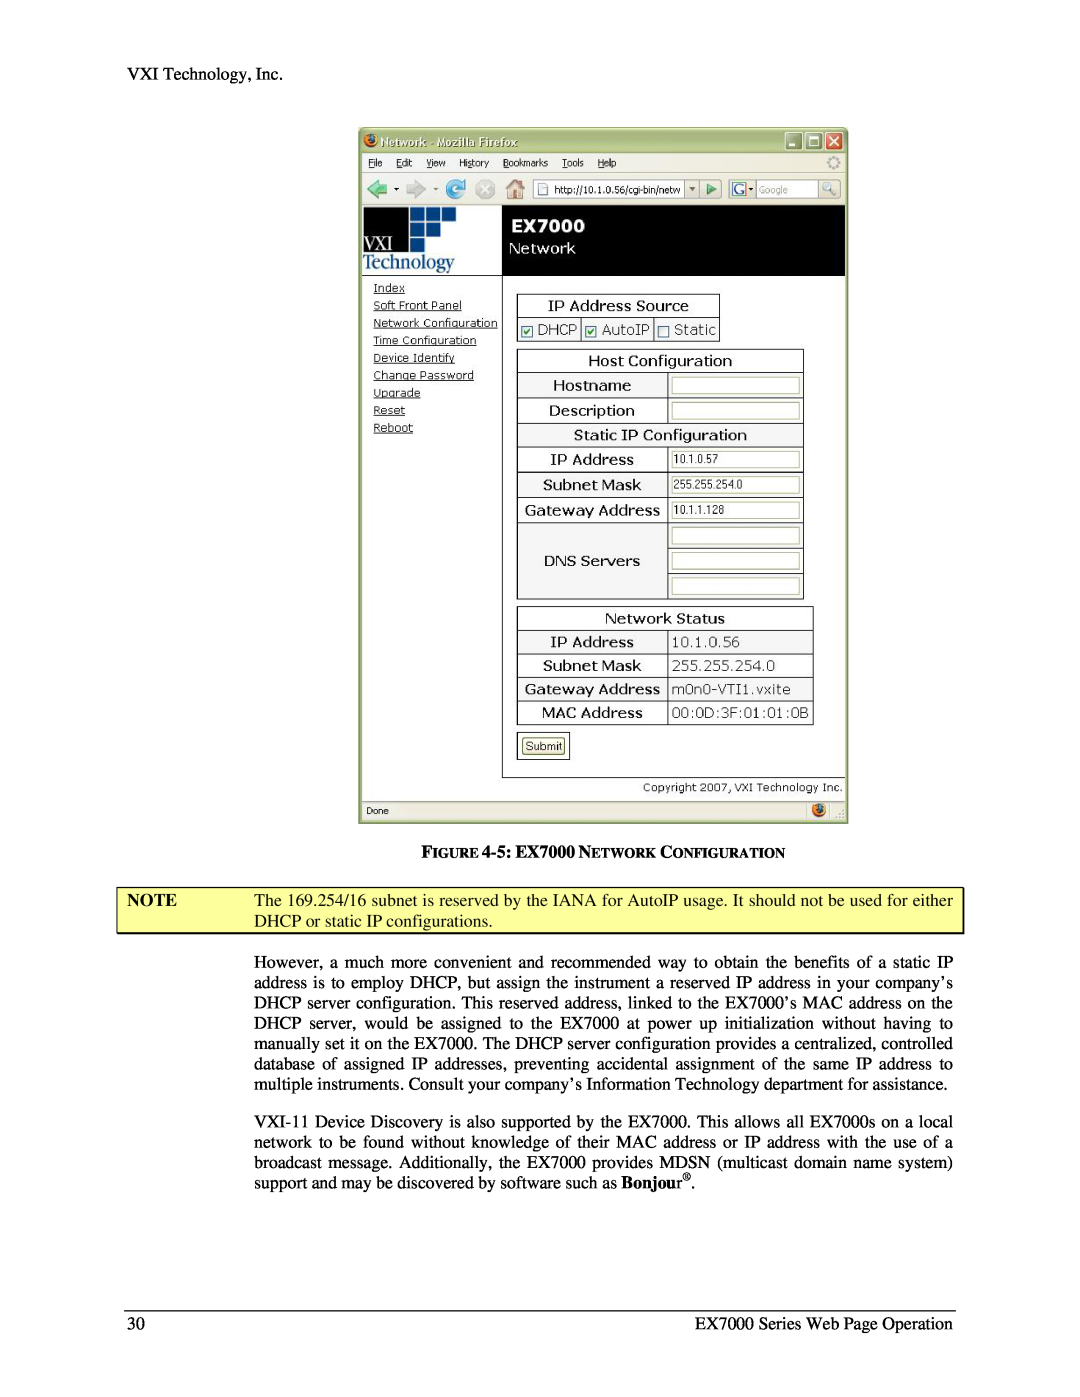 VXI user manual 5 EX7000 NETWORK CONFIGURATION 